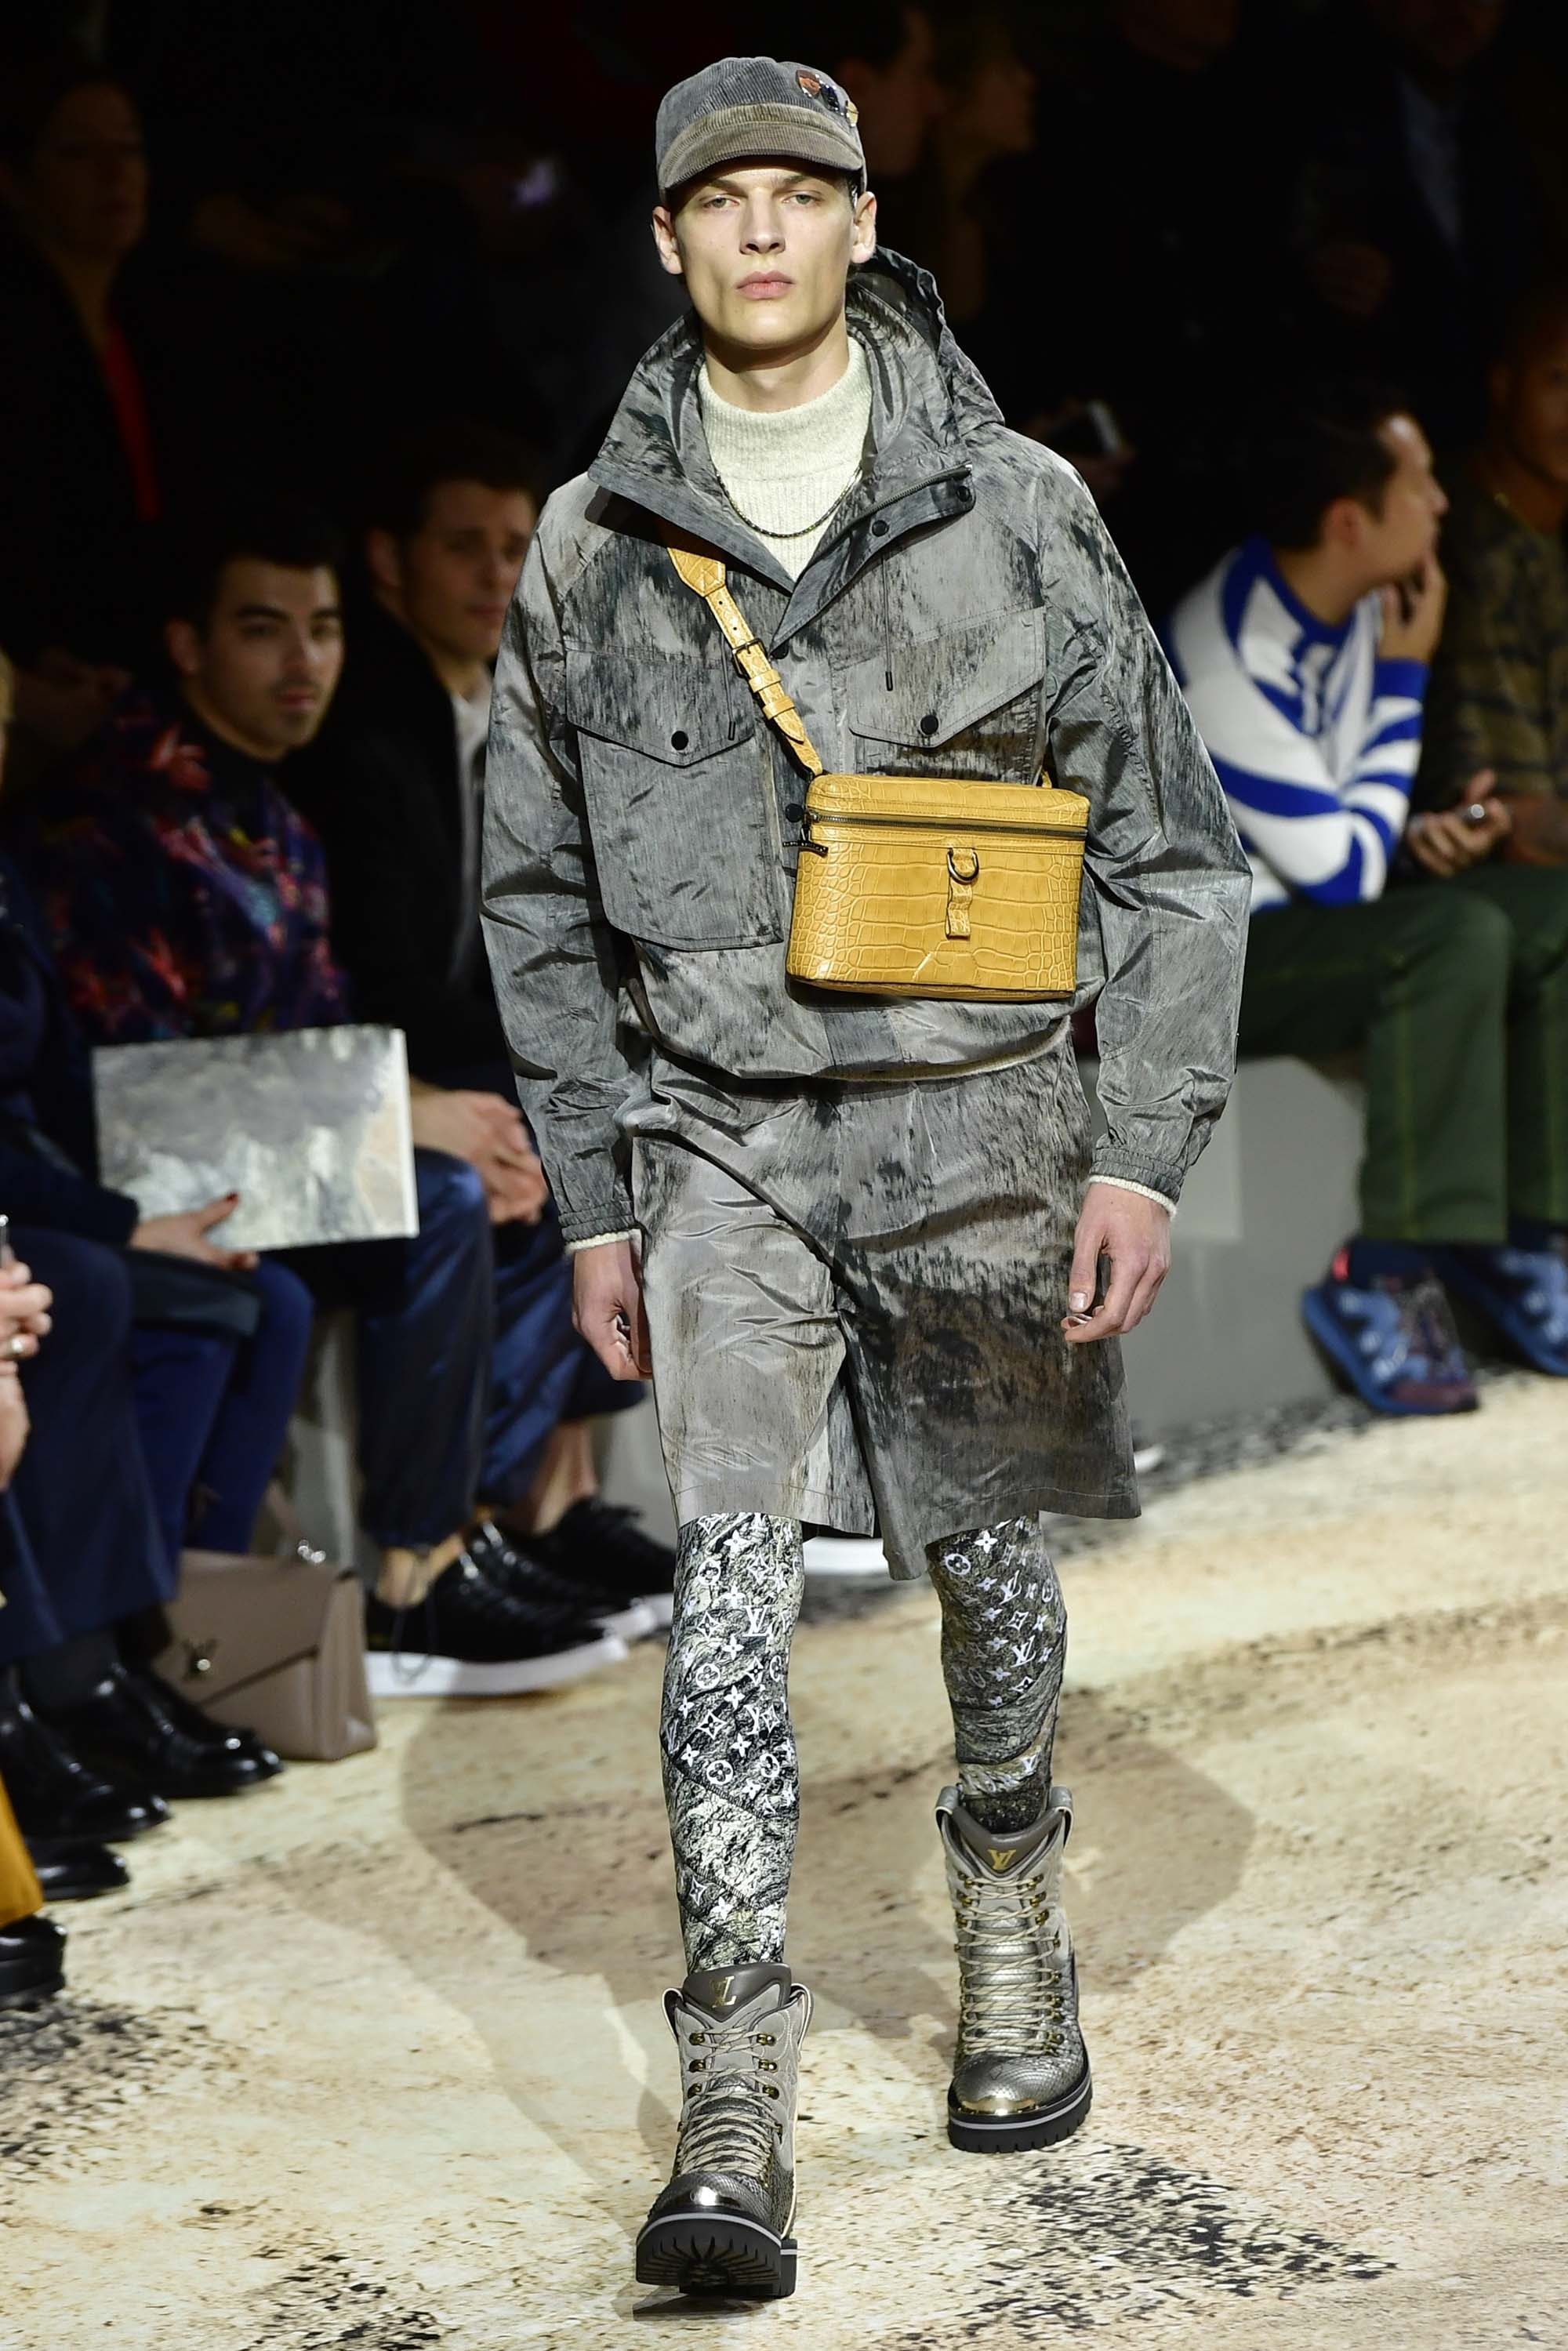 Louis Vuitton F/W 17 menswear #5 - Tagwalk: The Fashion Search Engine